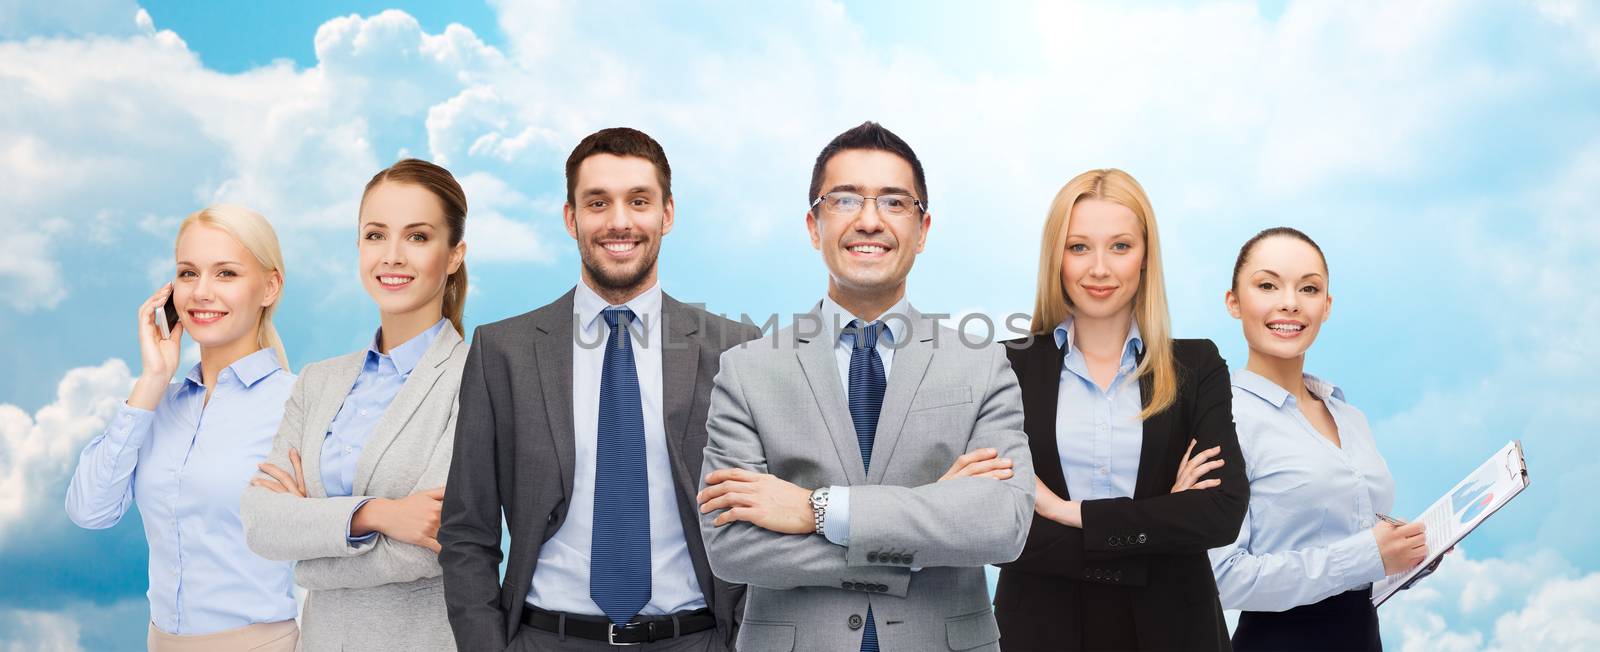 group of smiling businessmen over blue sky by dolgachov